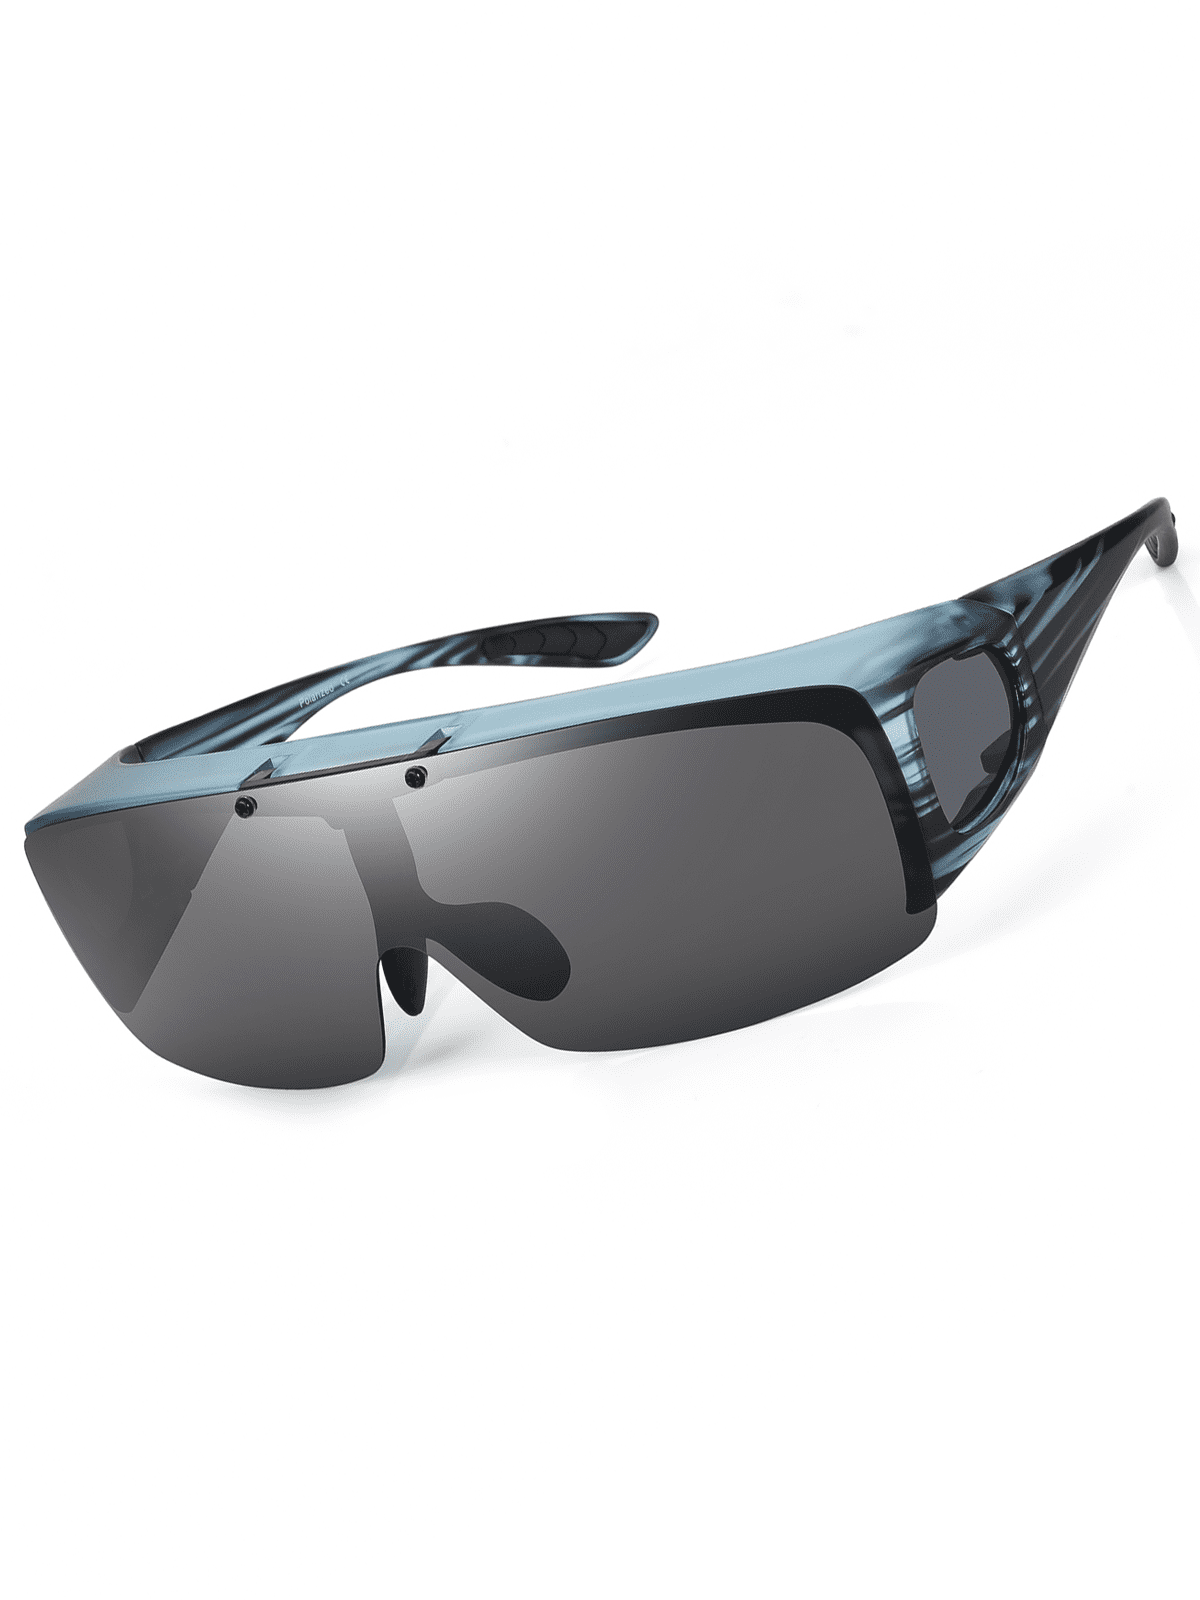 3 Pairs Fit Over Sunglasses for Men Women Polarized Lens Wrap Over Glasses  Sunglasses Sport Oversized Eyeglasses for Driving